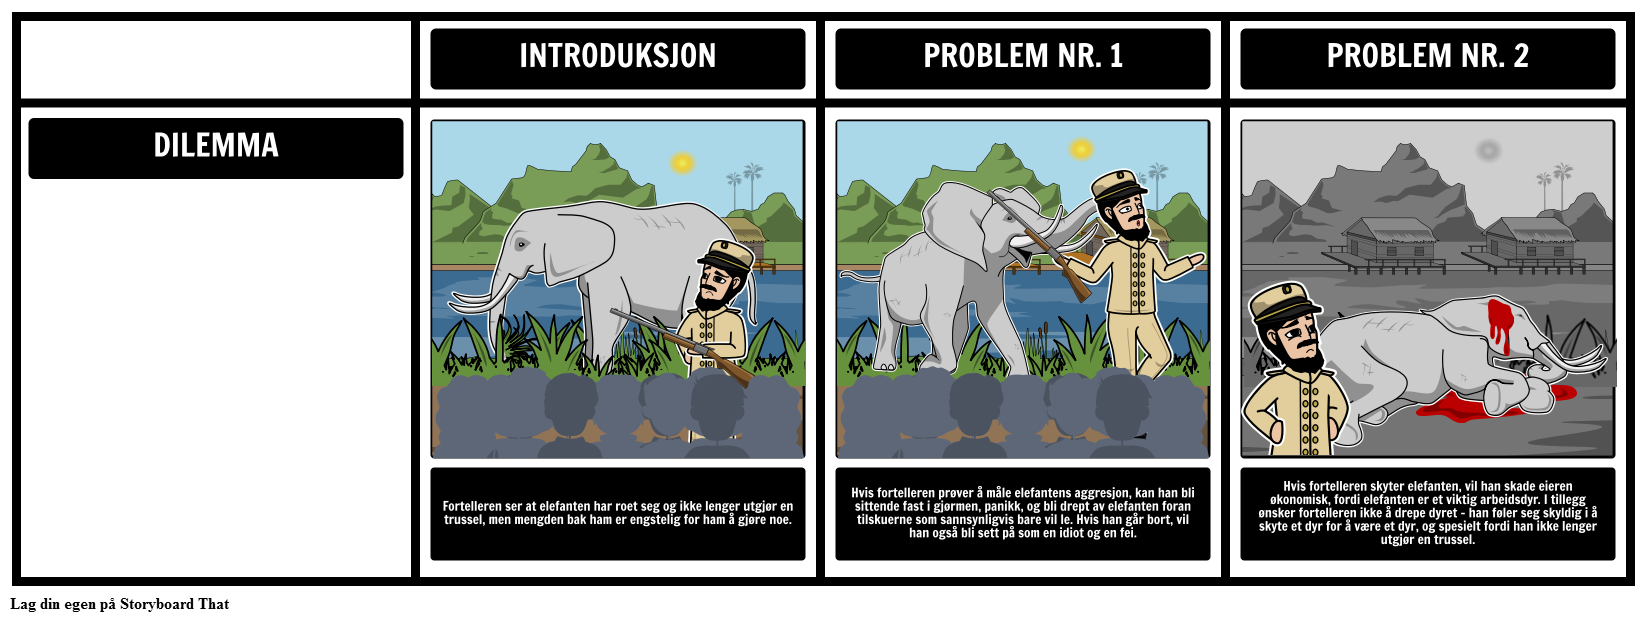 Analysere fortellerens dilemma i "Shooting an Elephant"